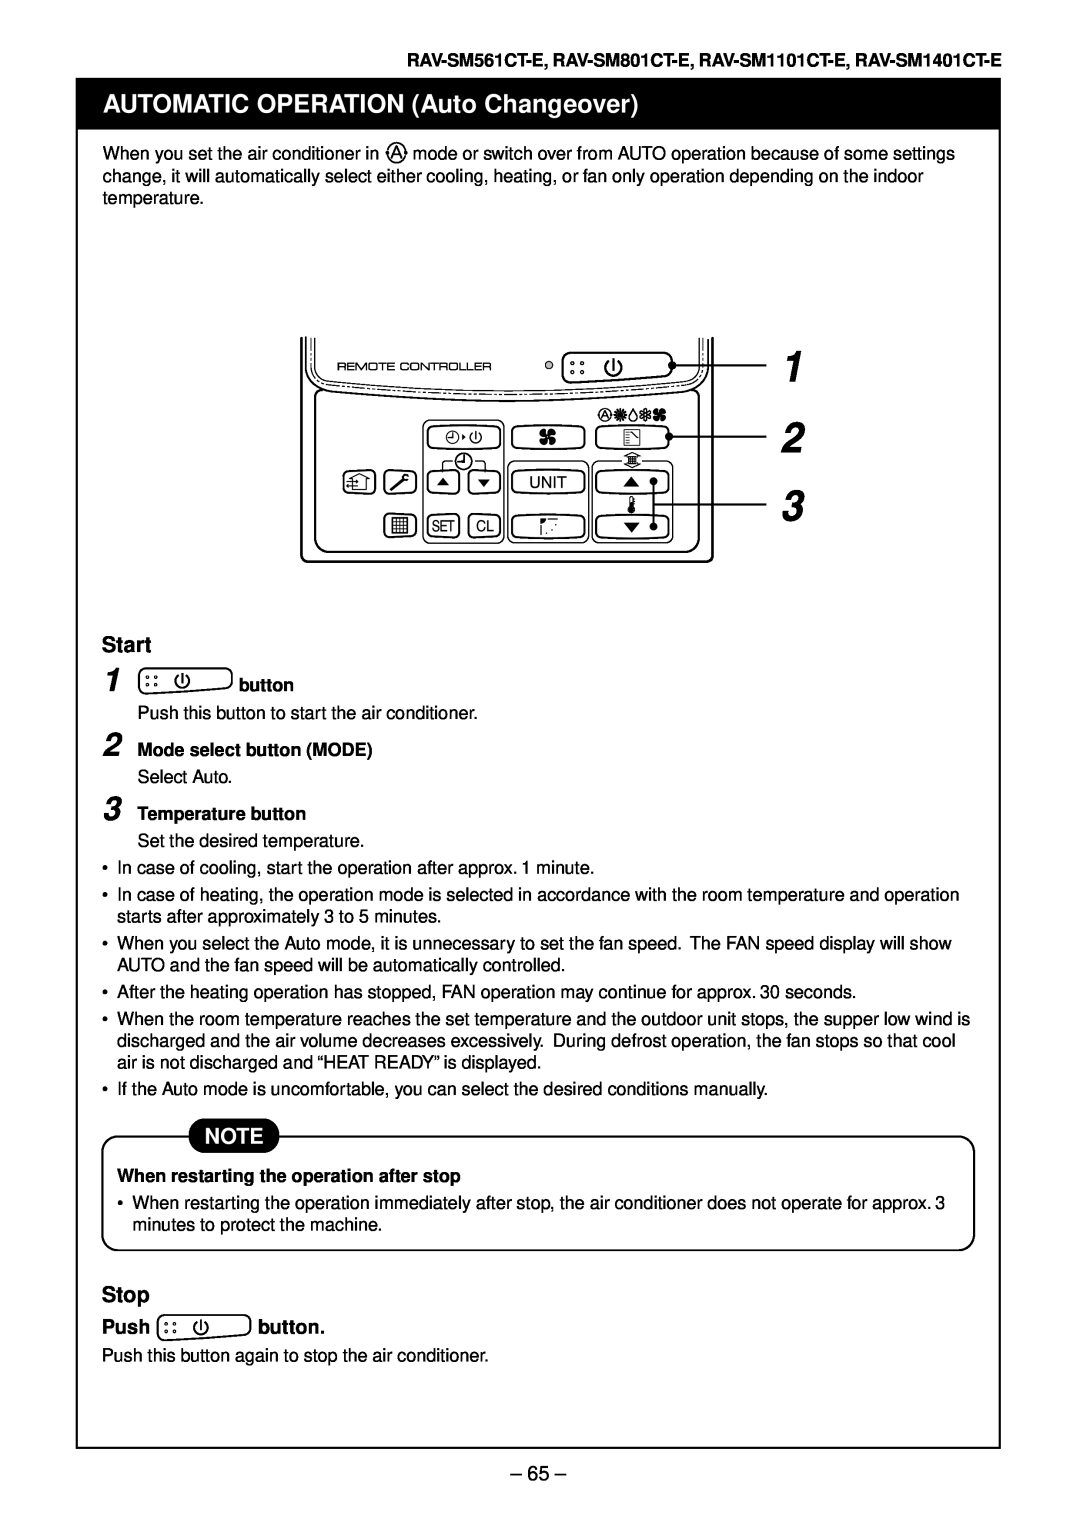 Toshiba RAV-SM1401AT-E AUTOMATIC OPERATION Auto Changeover, Start, Stop, Push button, Mode select button MODE 